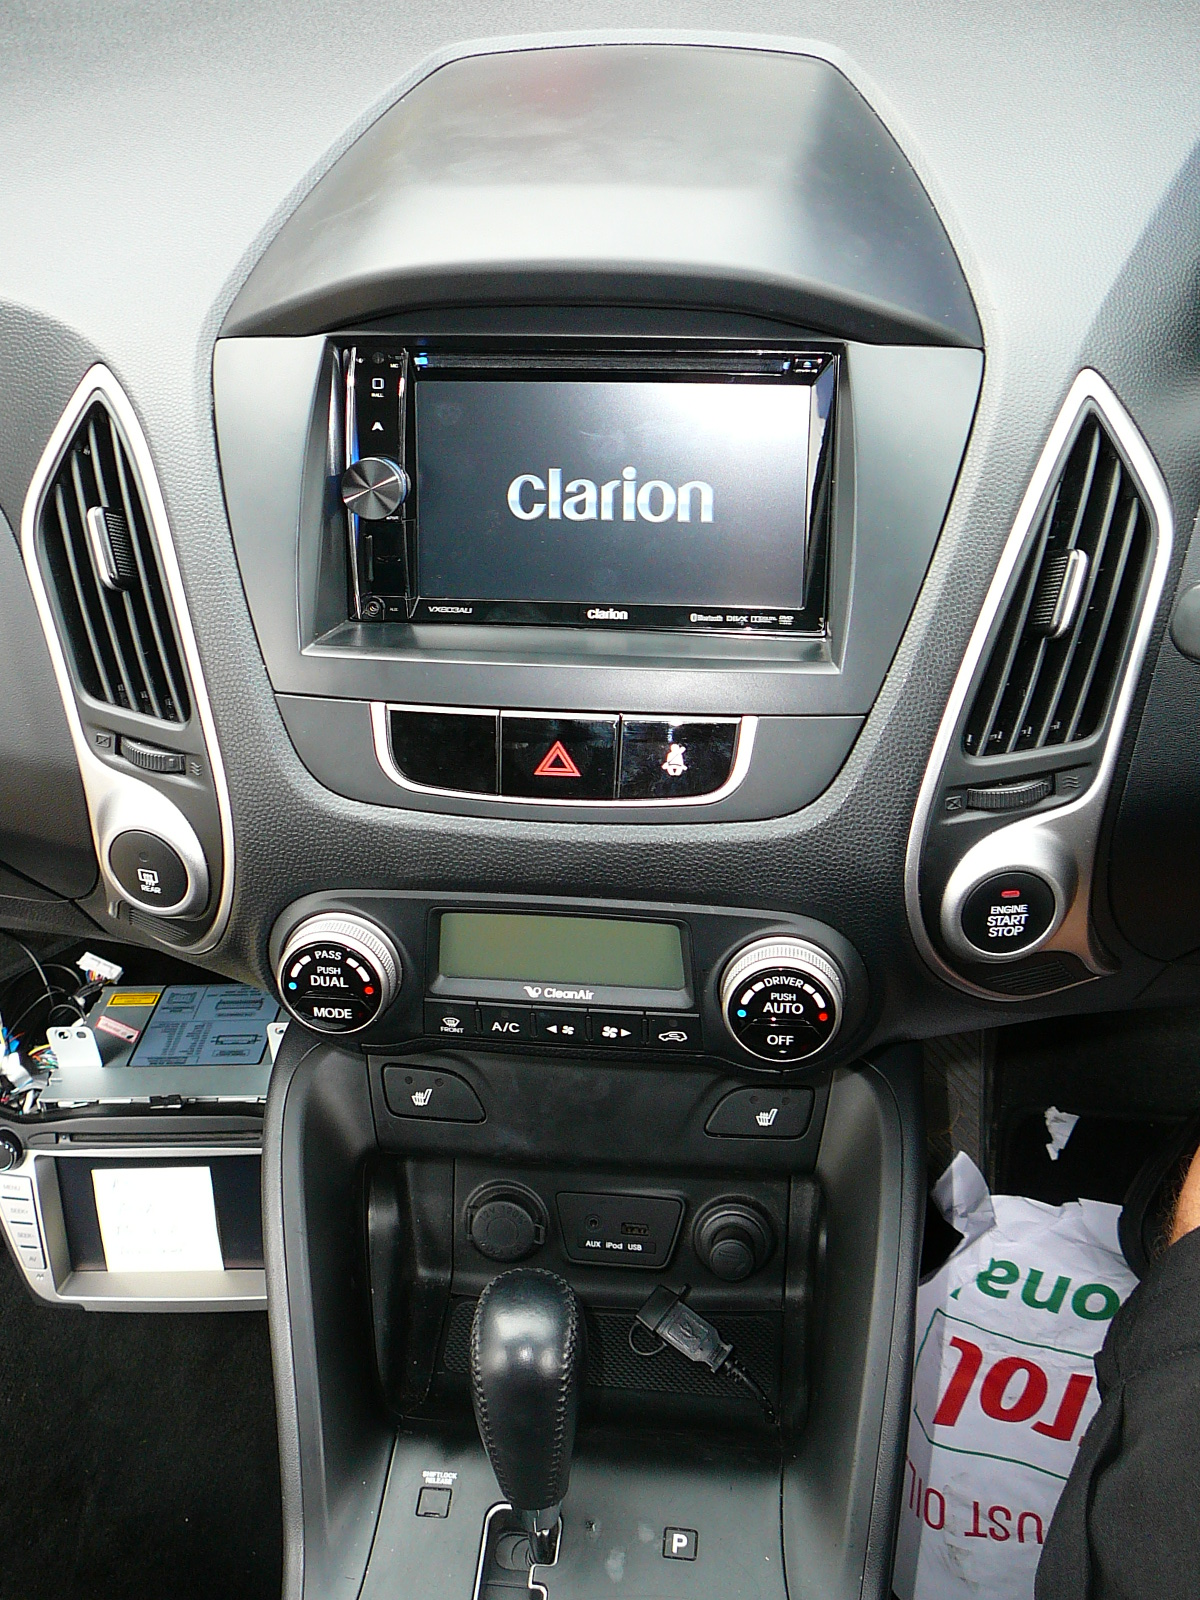 Hyundai ix35 2011, Clarion In Dash GPS Navigaion and Reverse Camera Installation